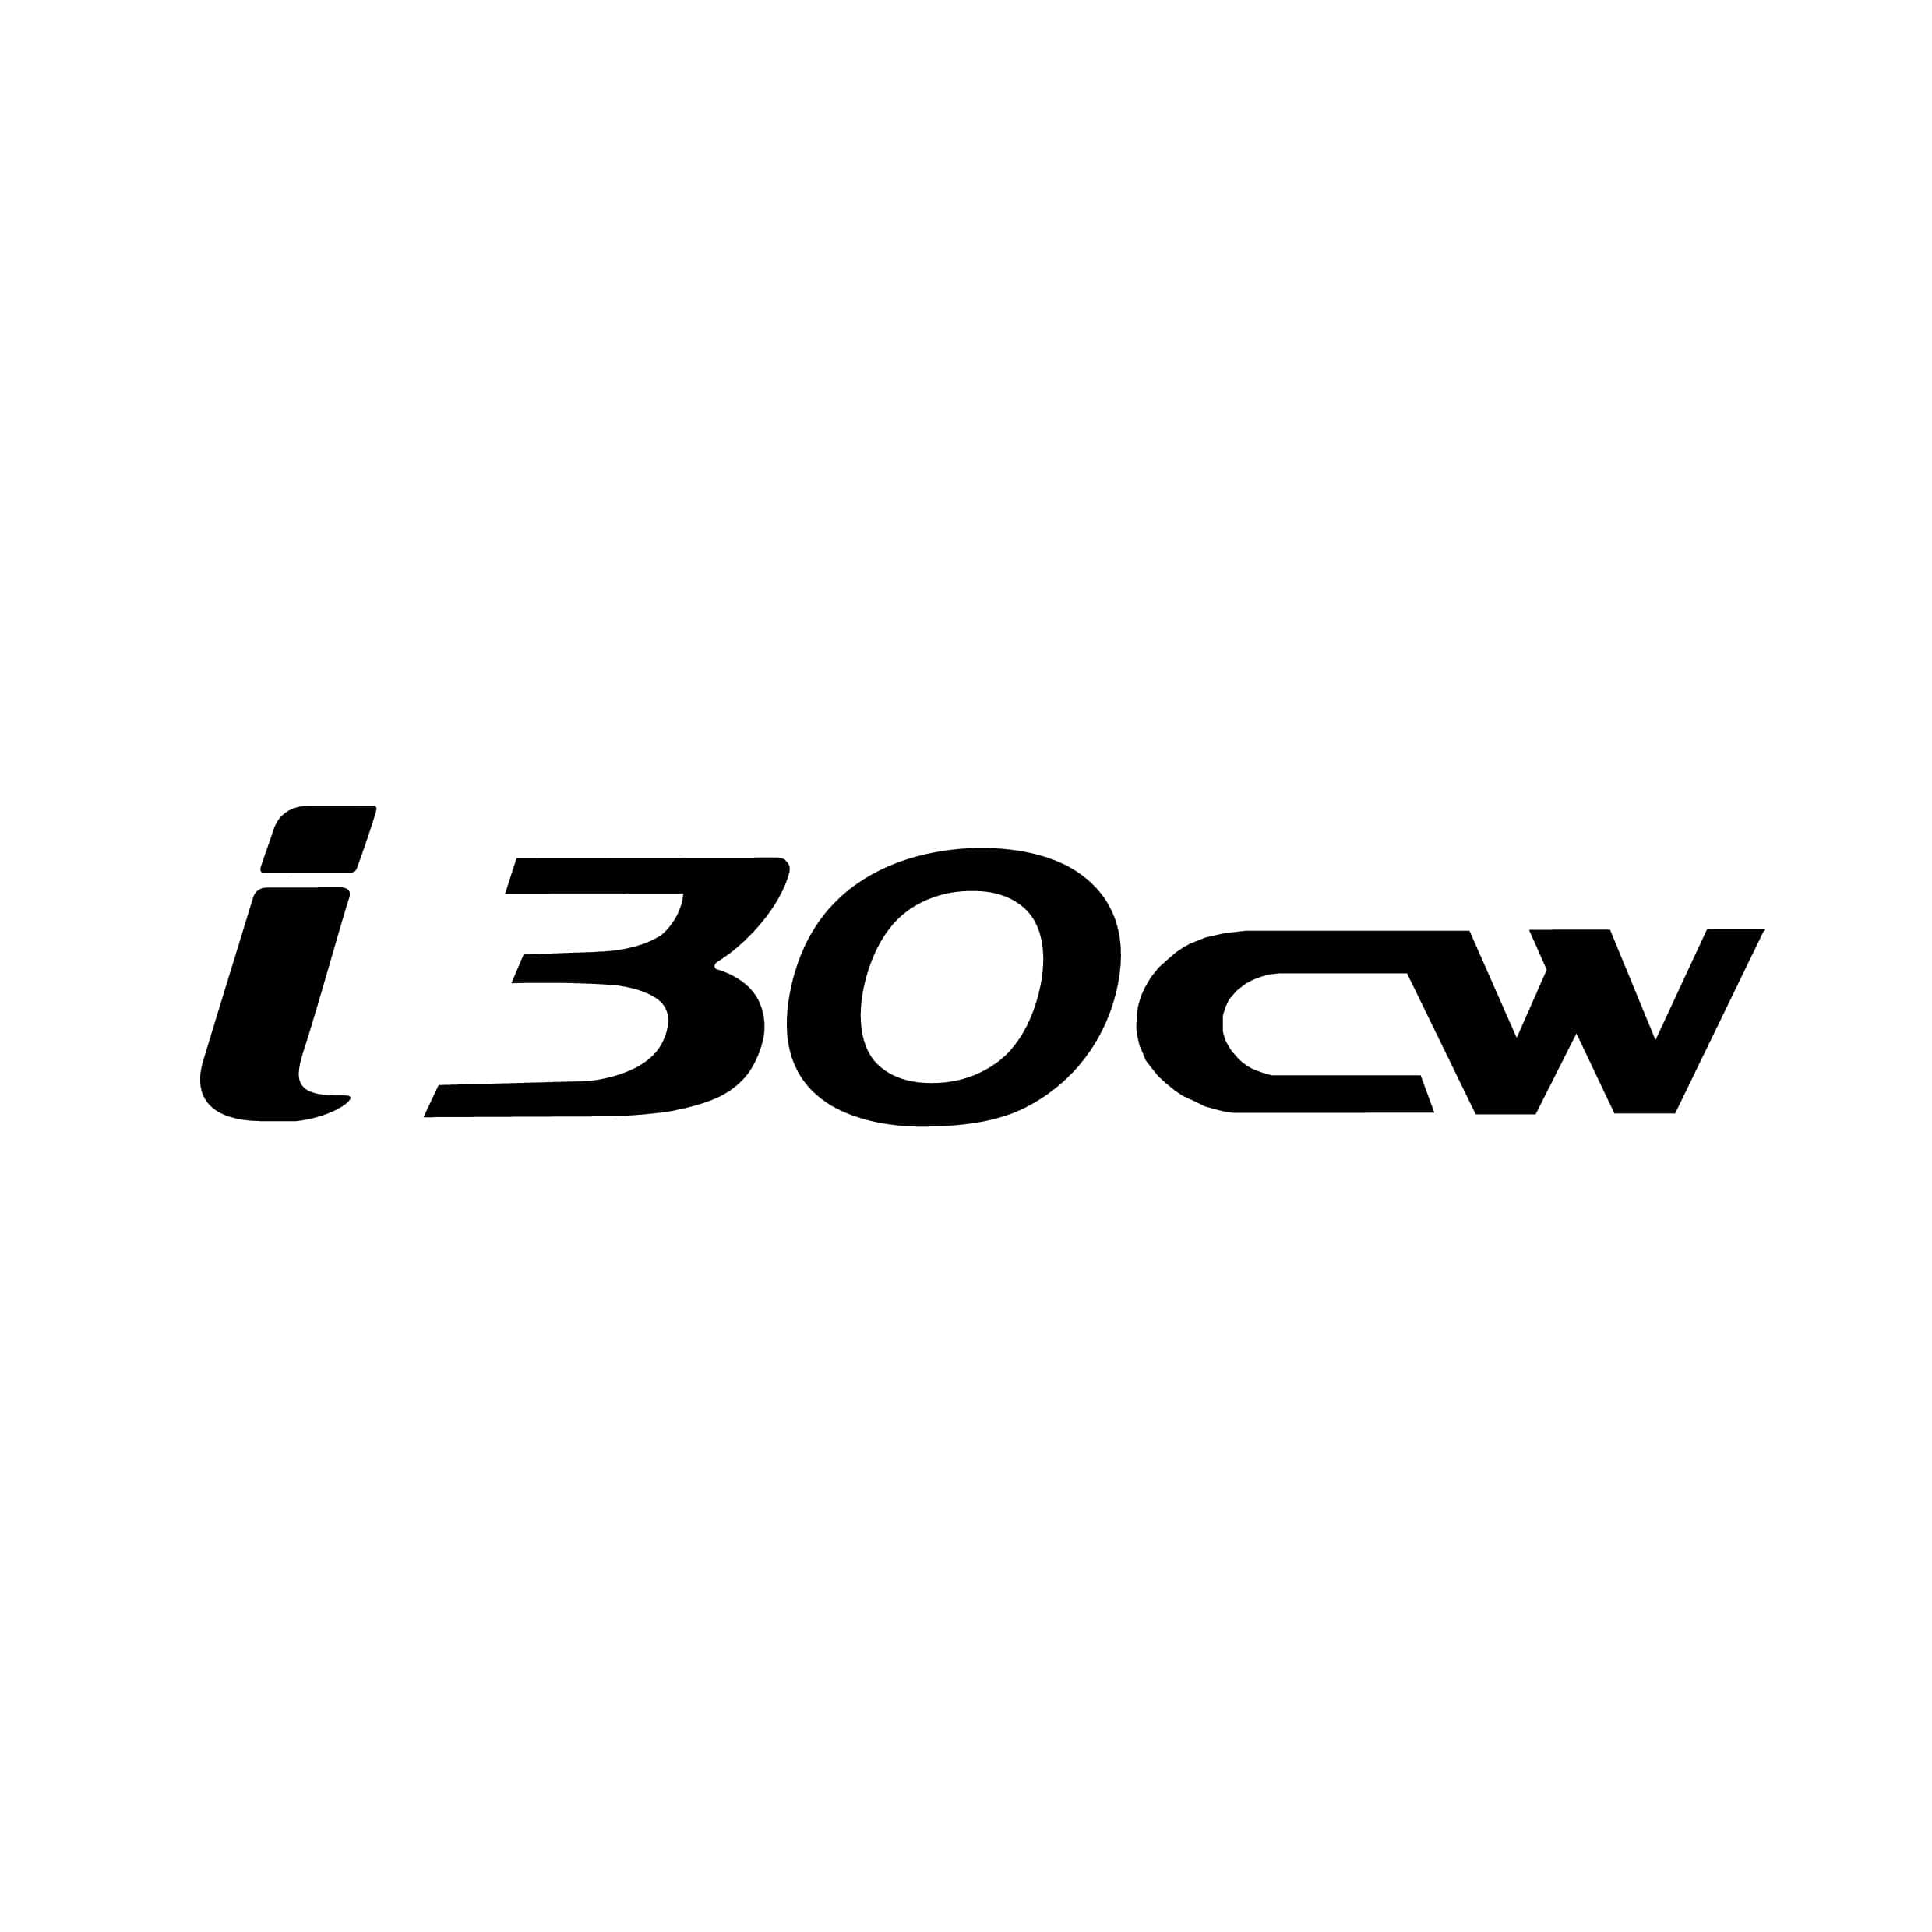 stickers-hyundai-i30cw-ref27-autocollant-voiture-sticker-auto-autocollants-decals-sponsors-racing-tuning-sport-logo-min